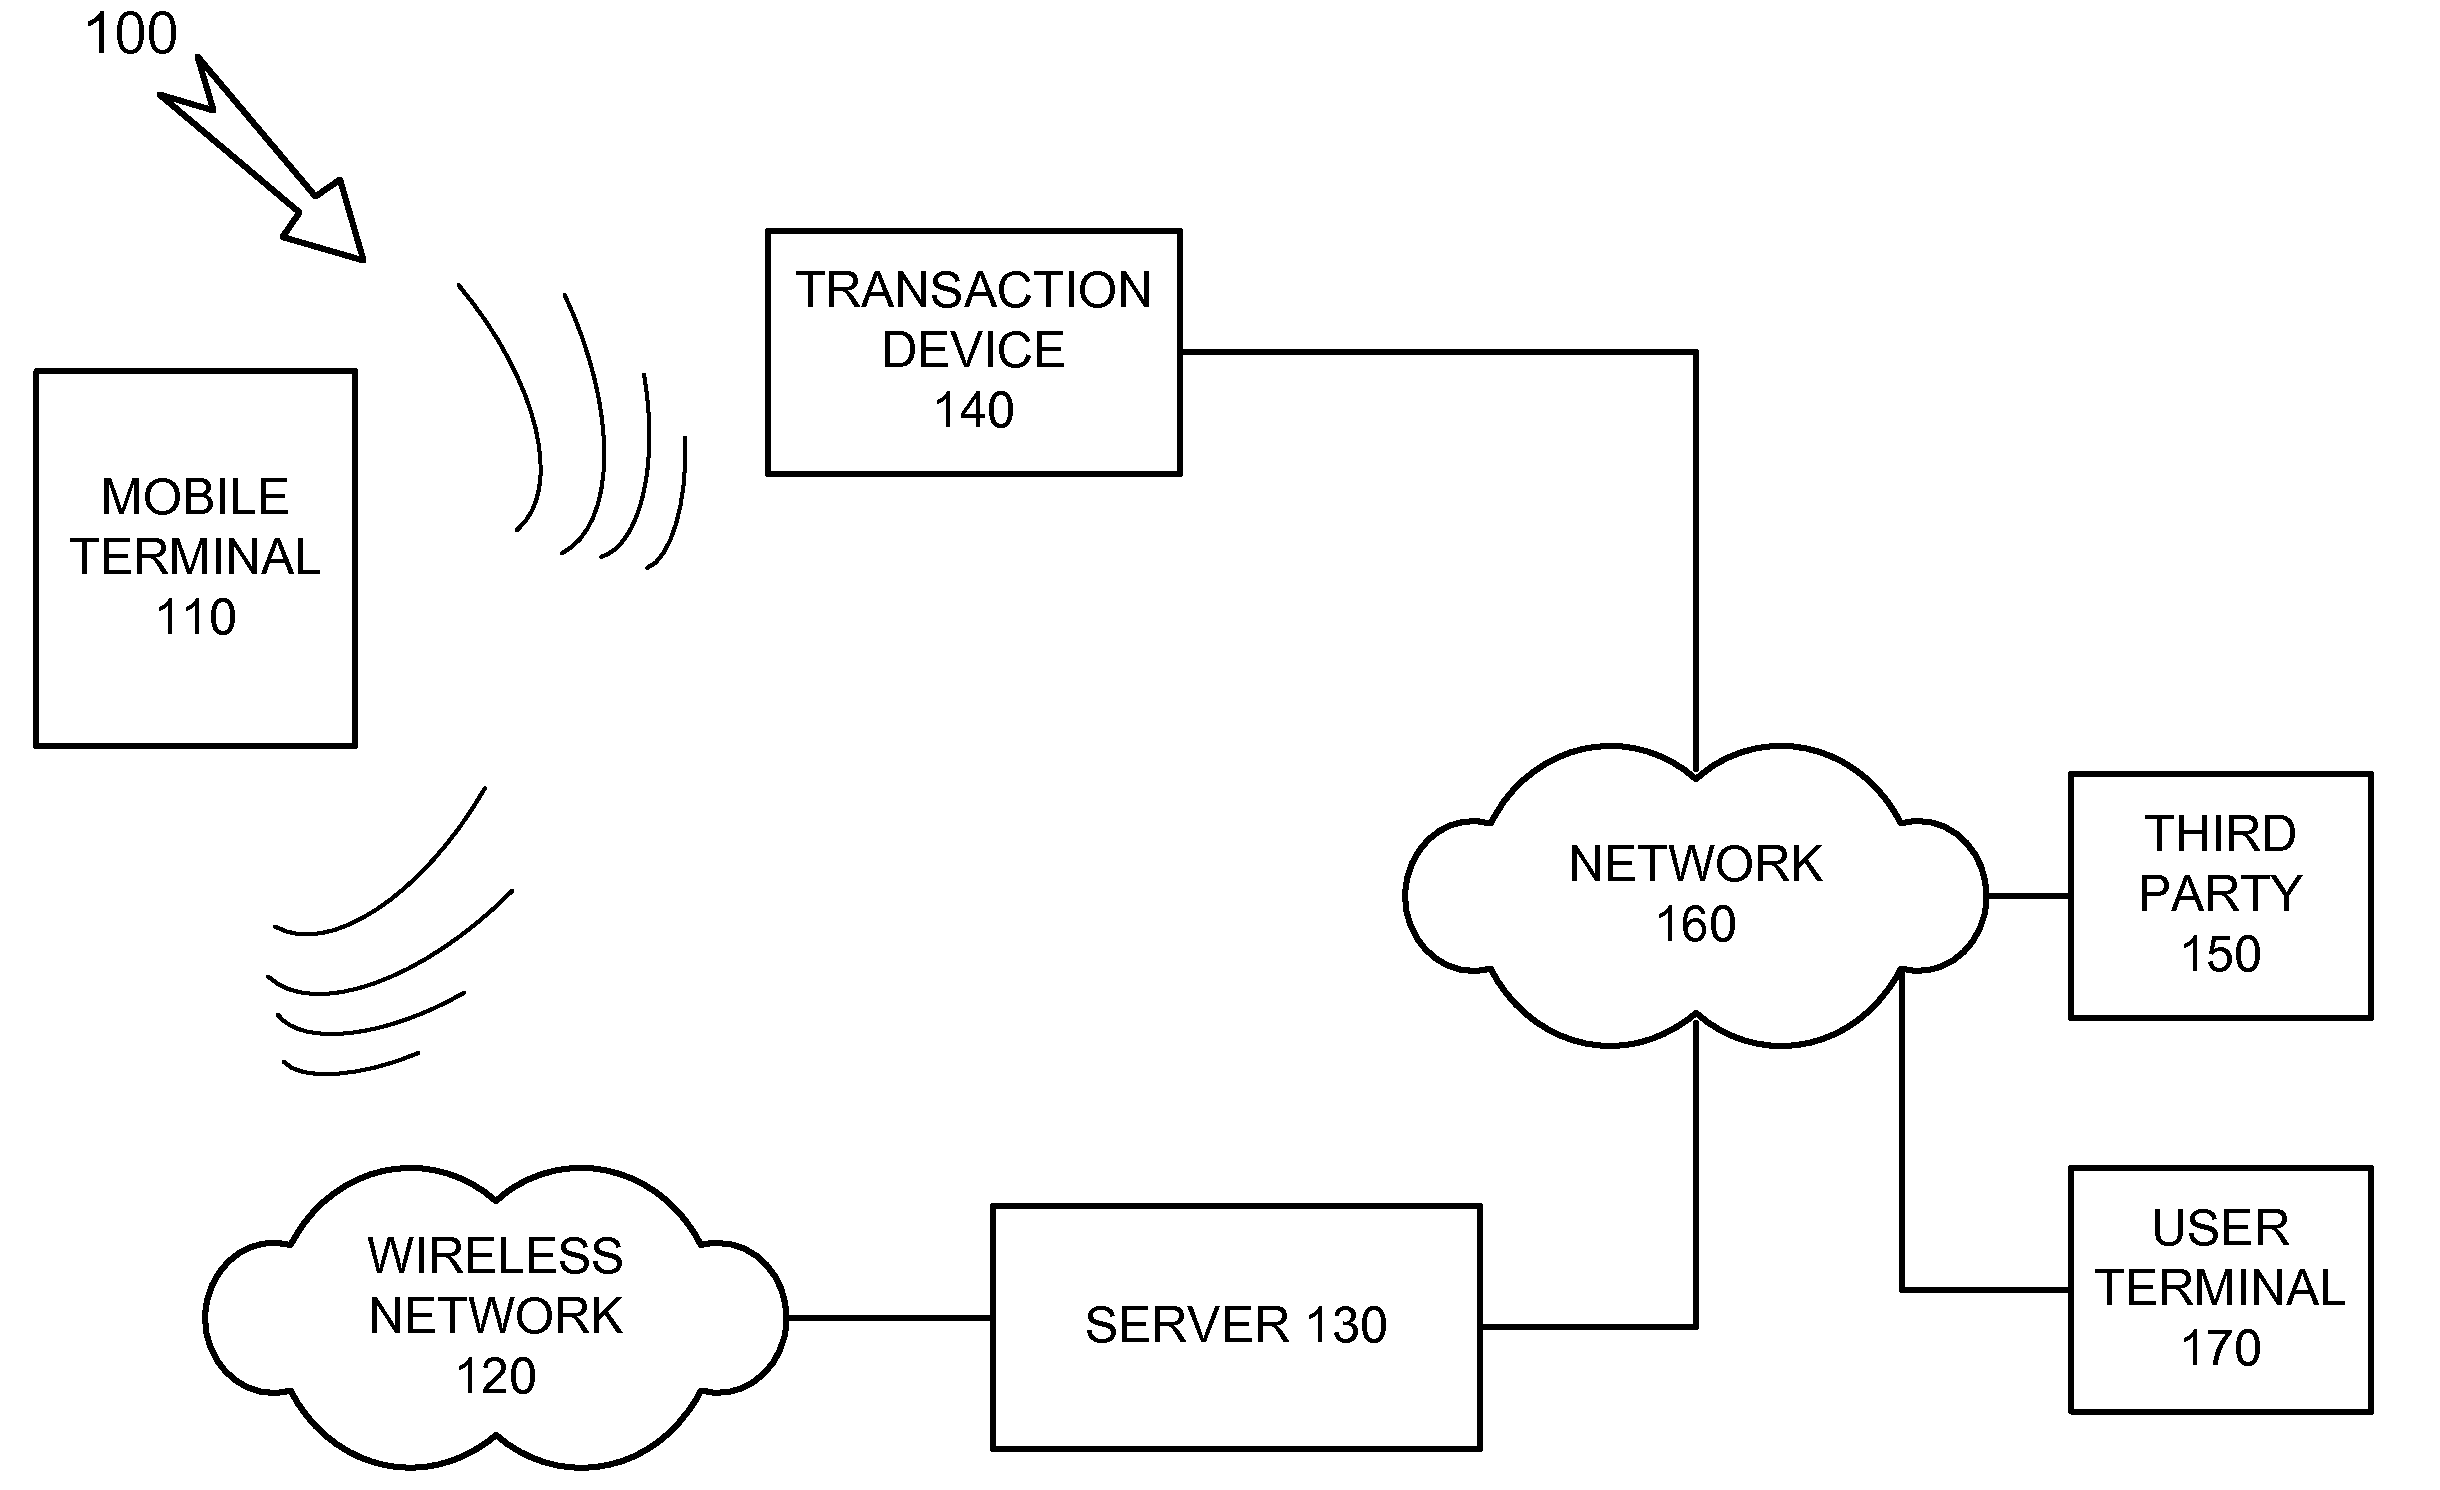 Multi-function transaction device